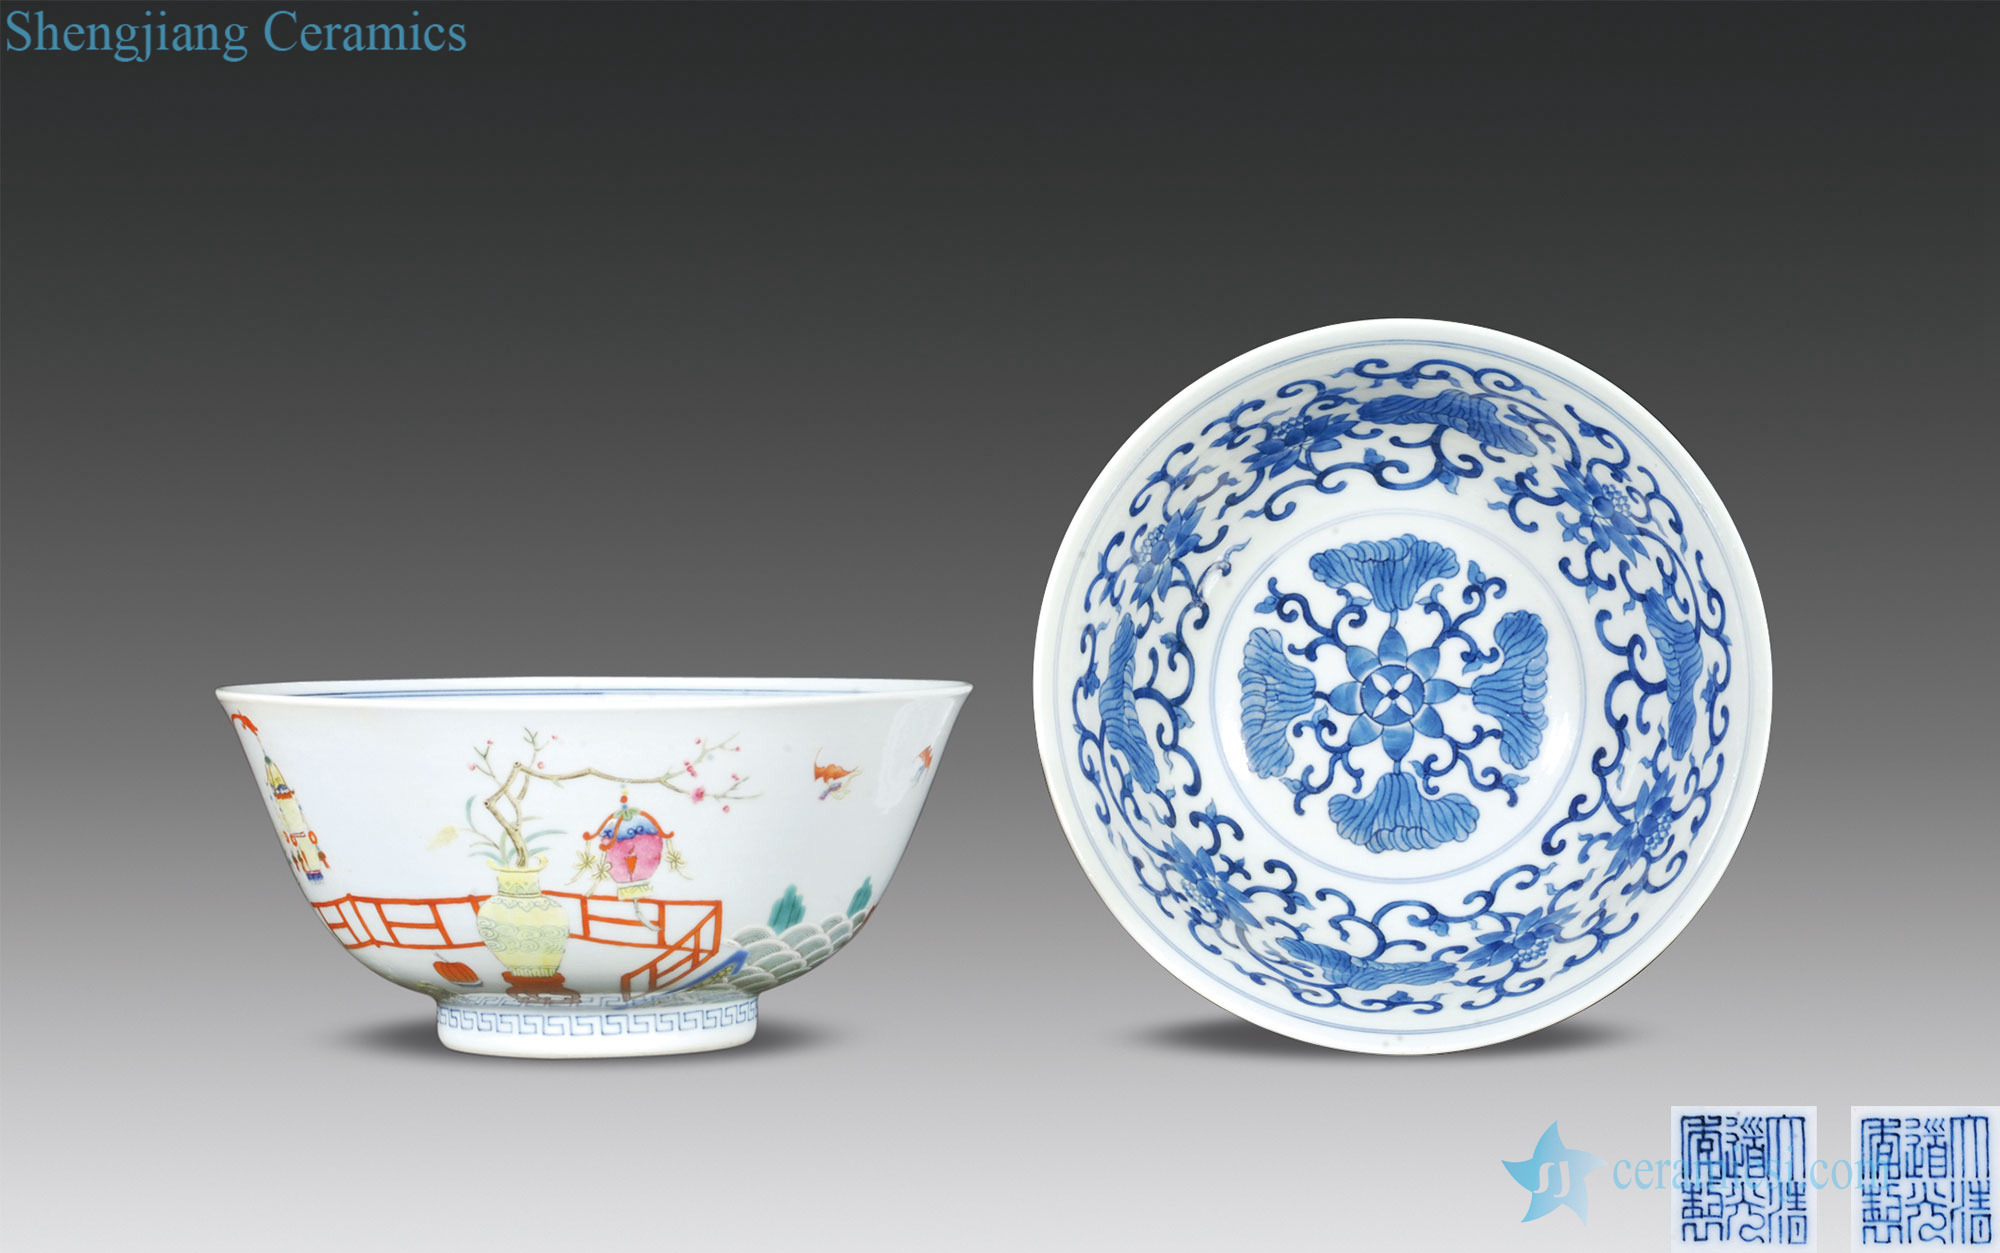 Clear light pastel blue lotus pattern outside inside the grain and make it plentiful figure bowl (a)